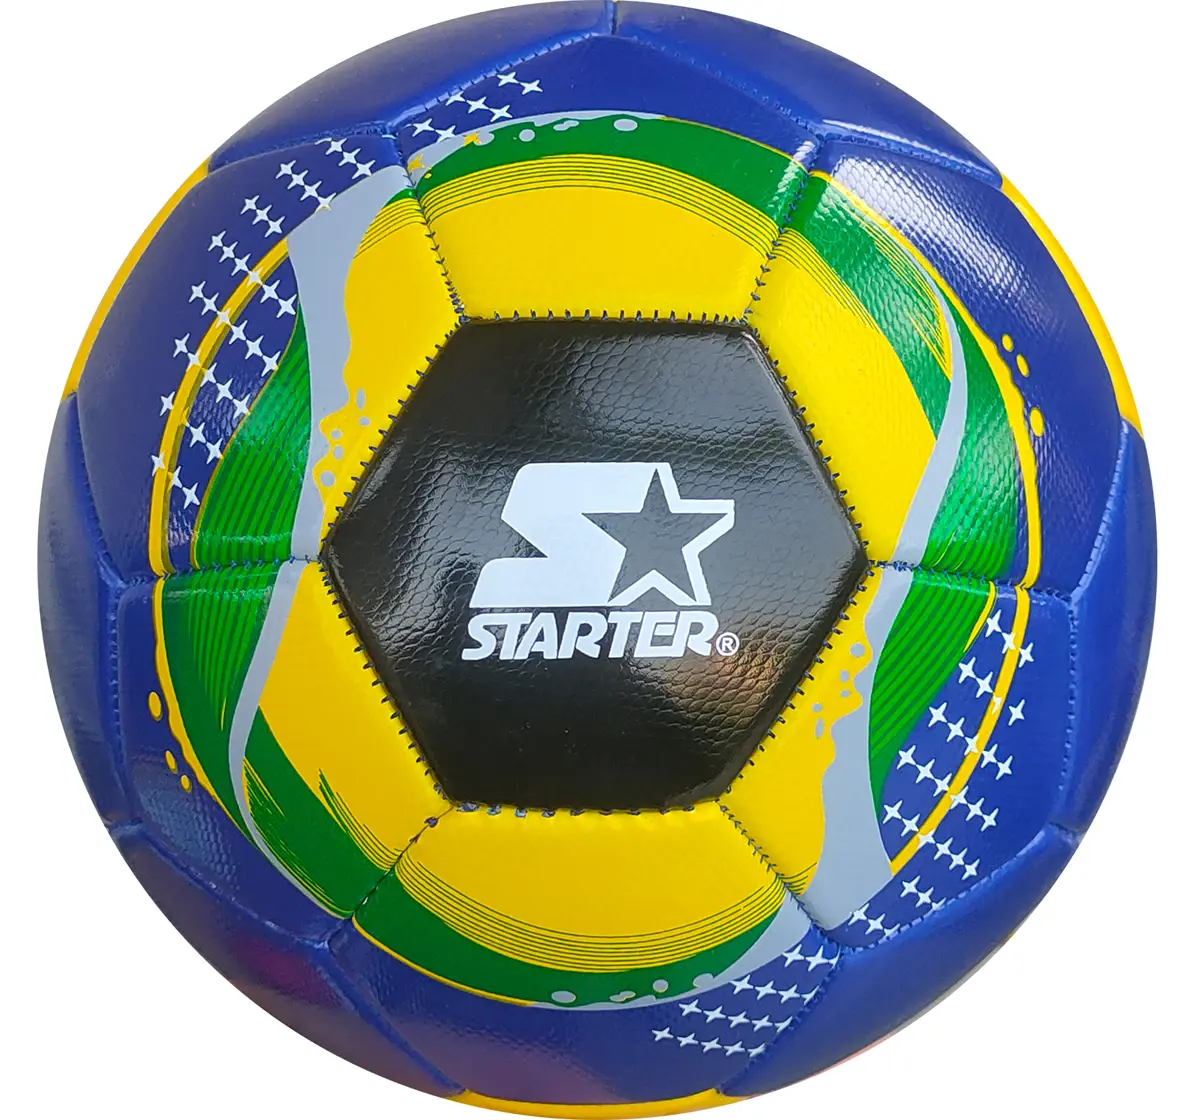 Starter Final Kick Football L2  Size 5 - Blue